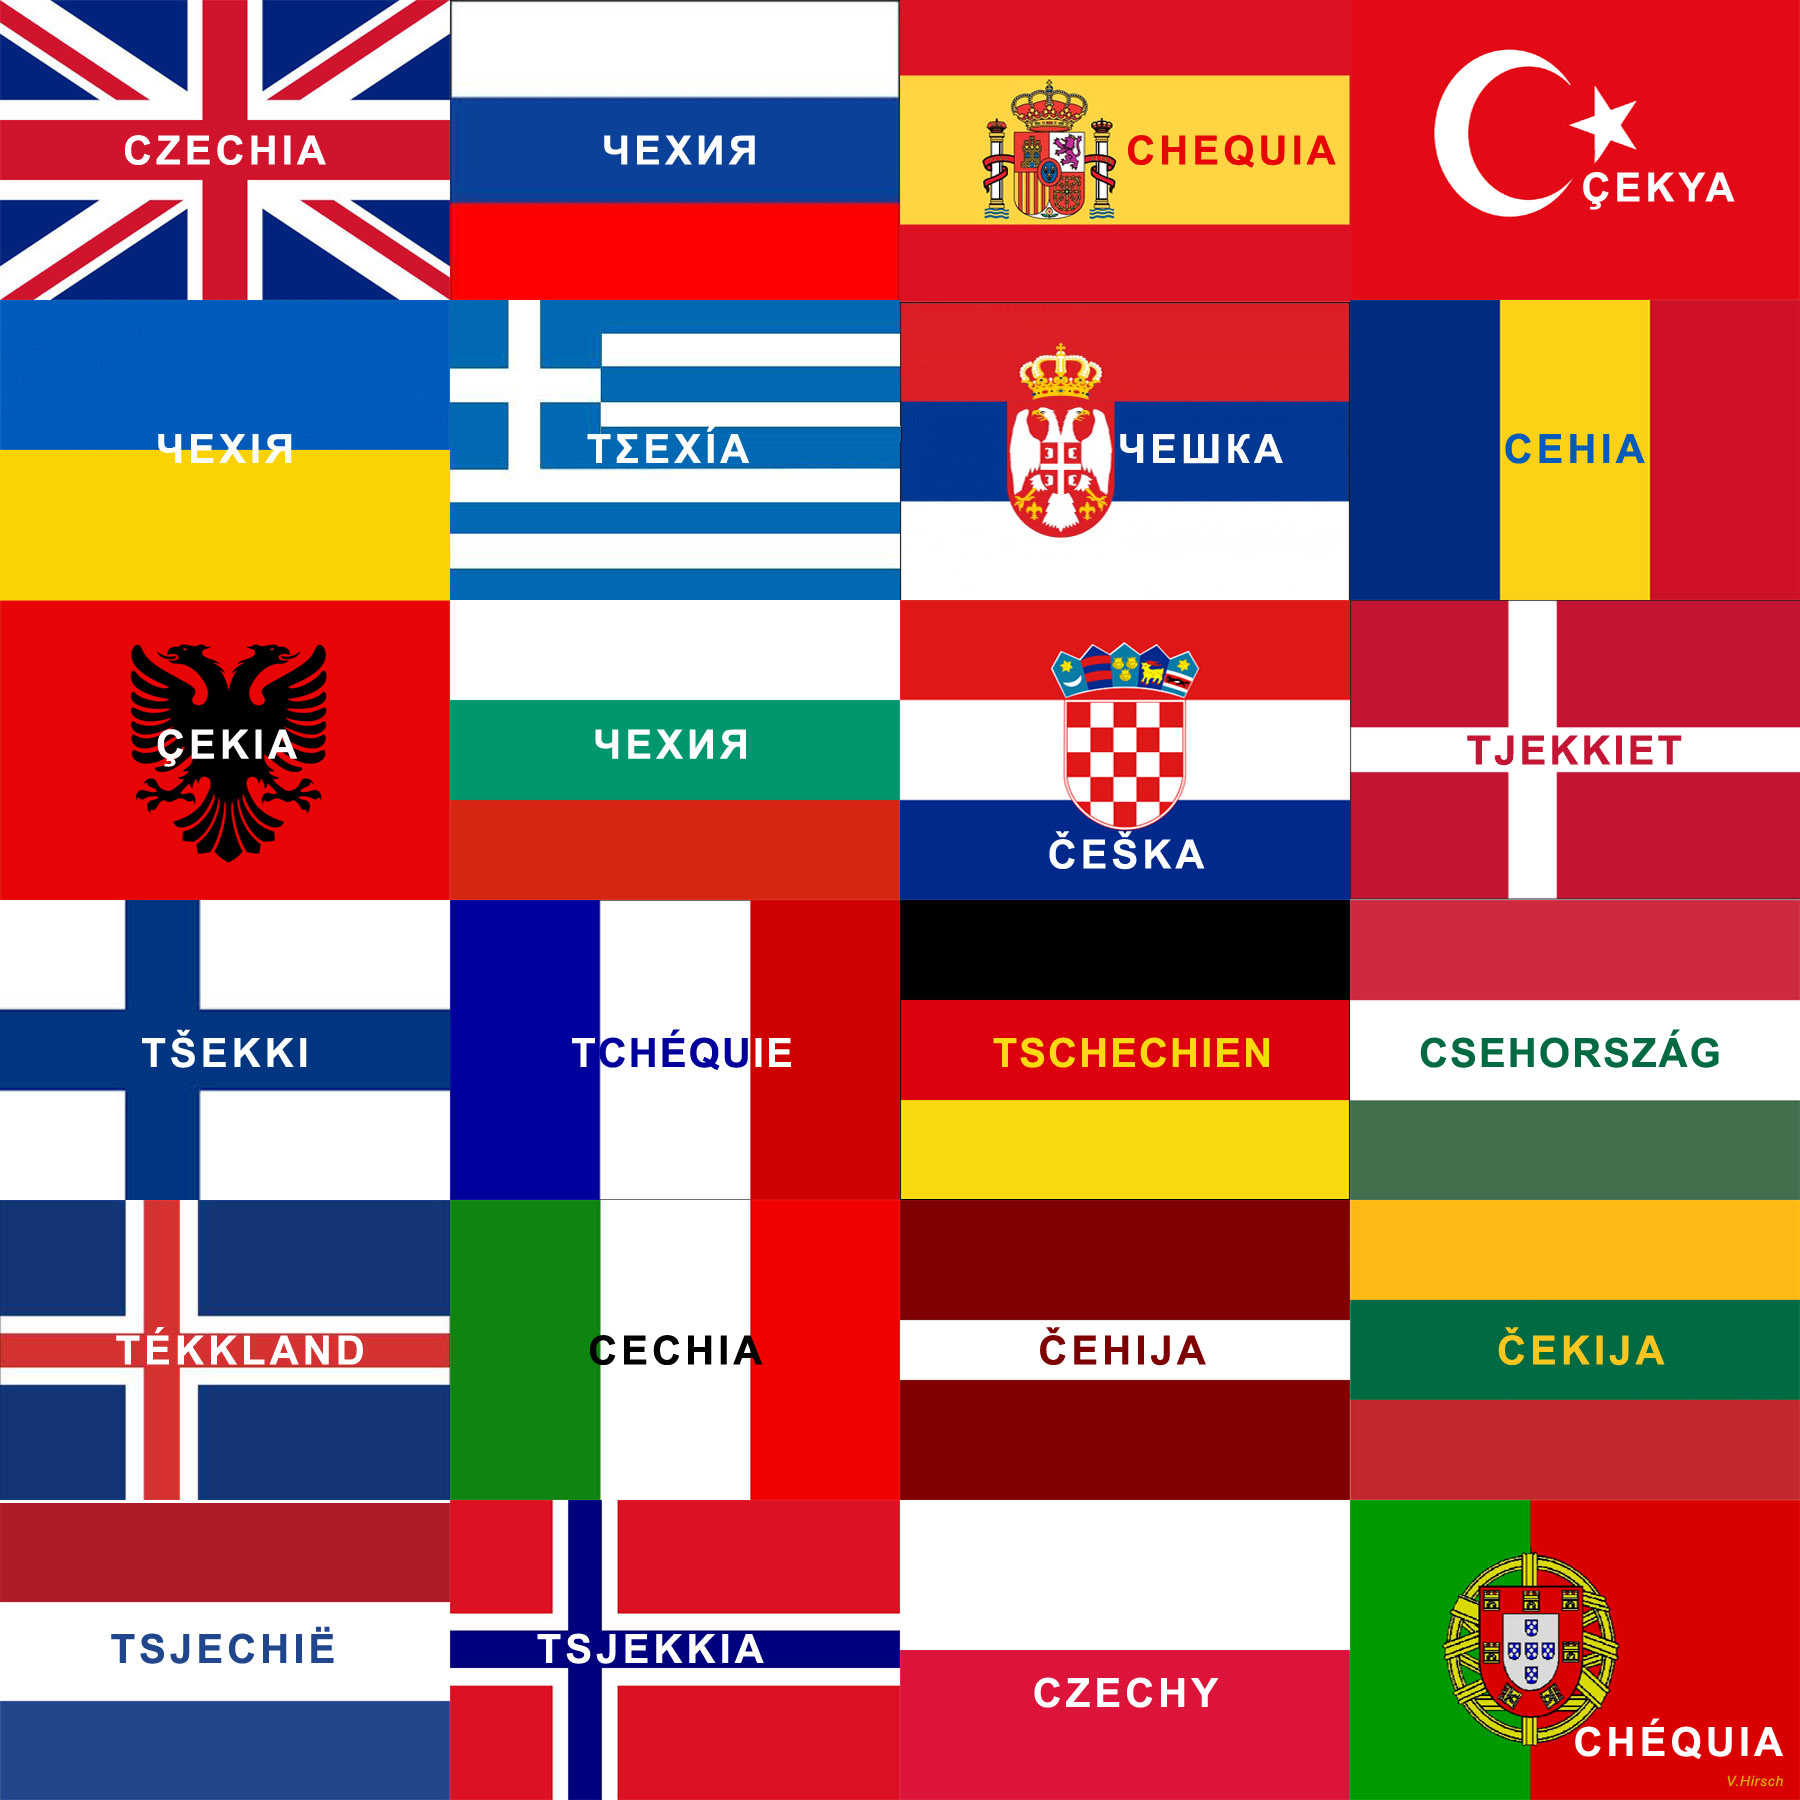 Czechia In European Languages